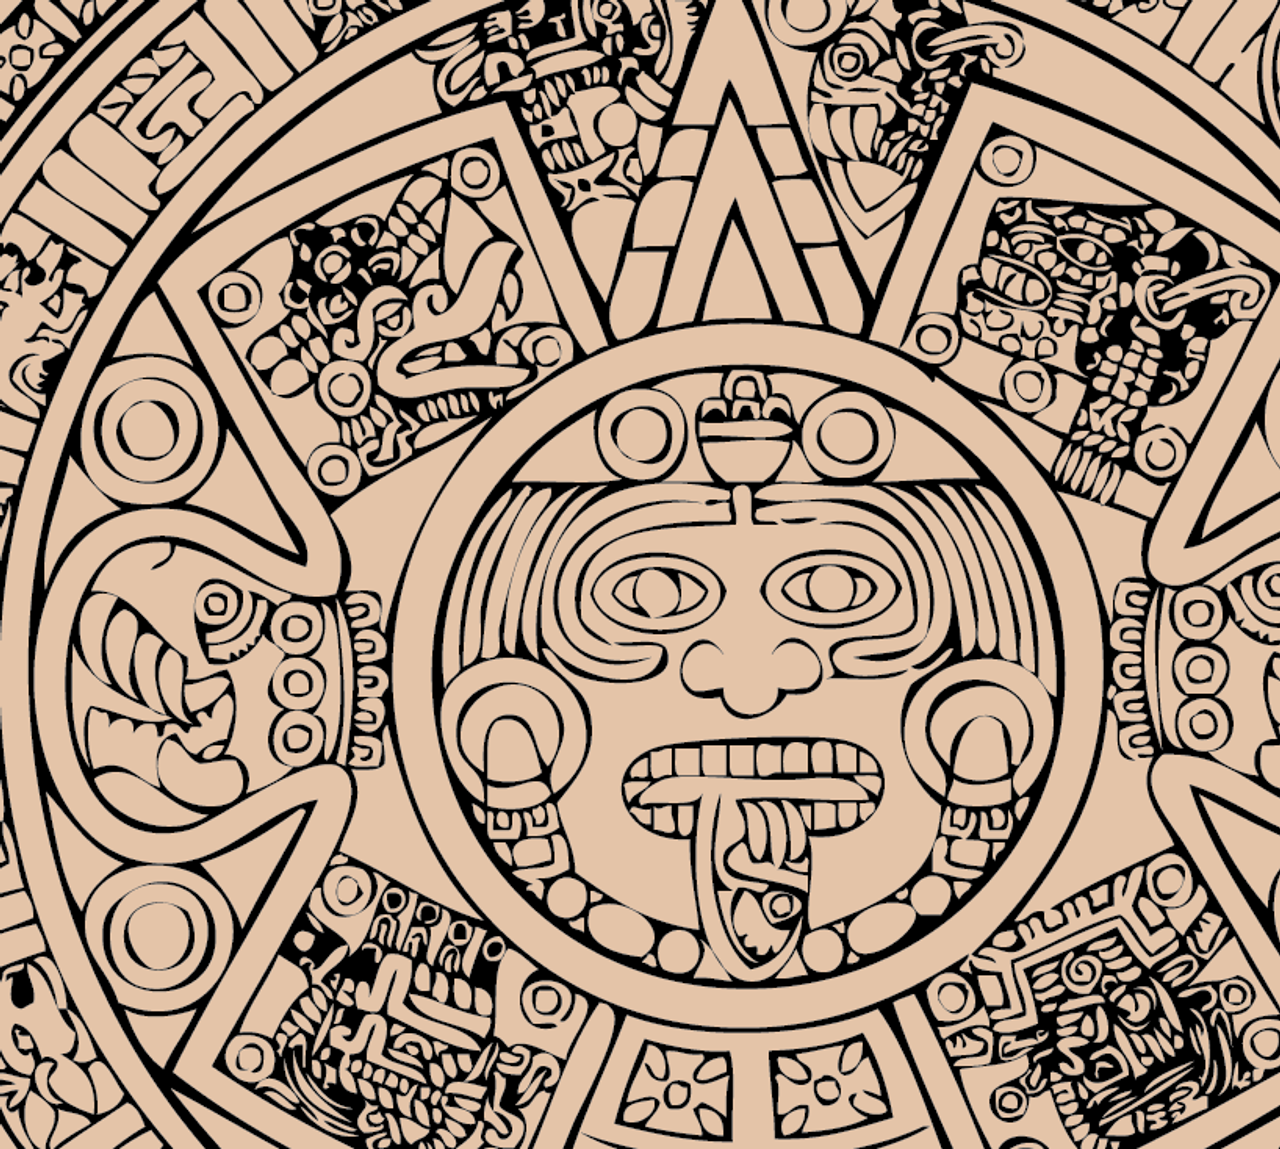 mayan calendar symbols vector